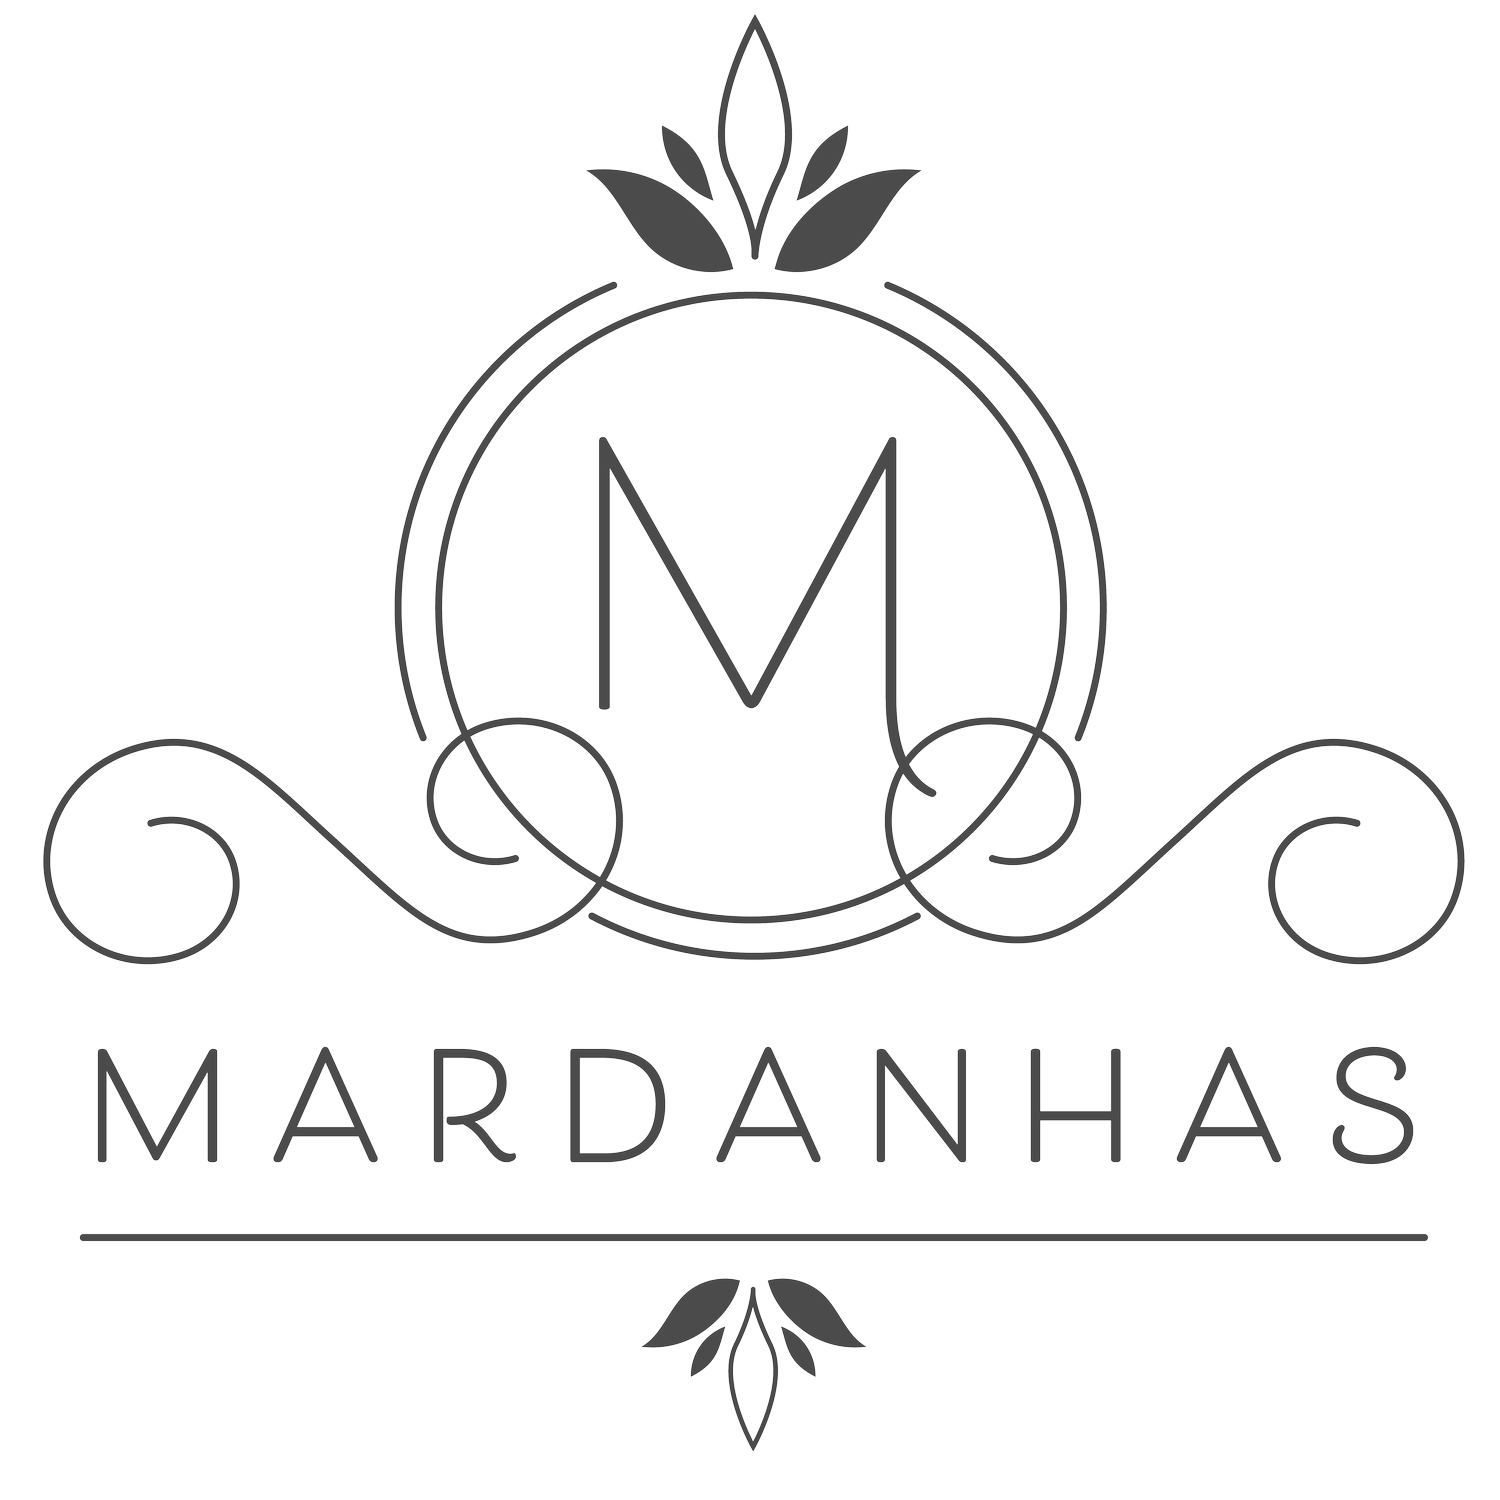 Mardanha's